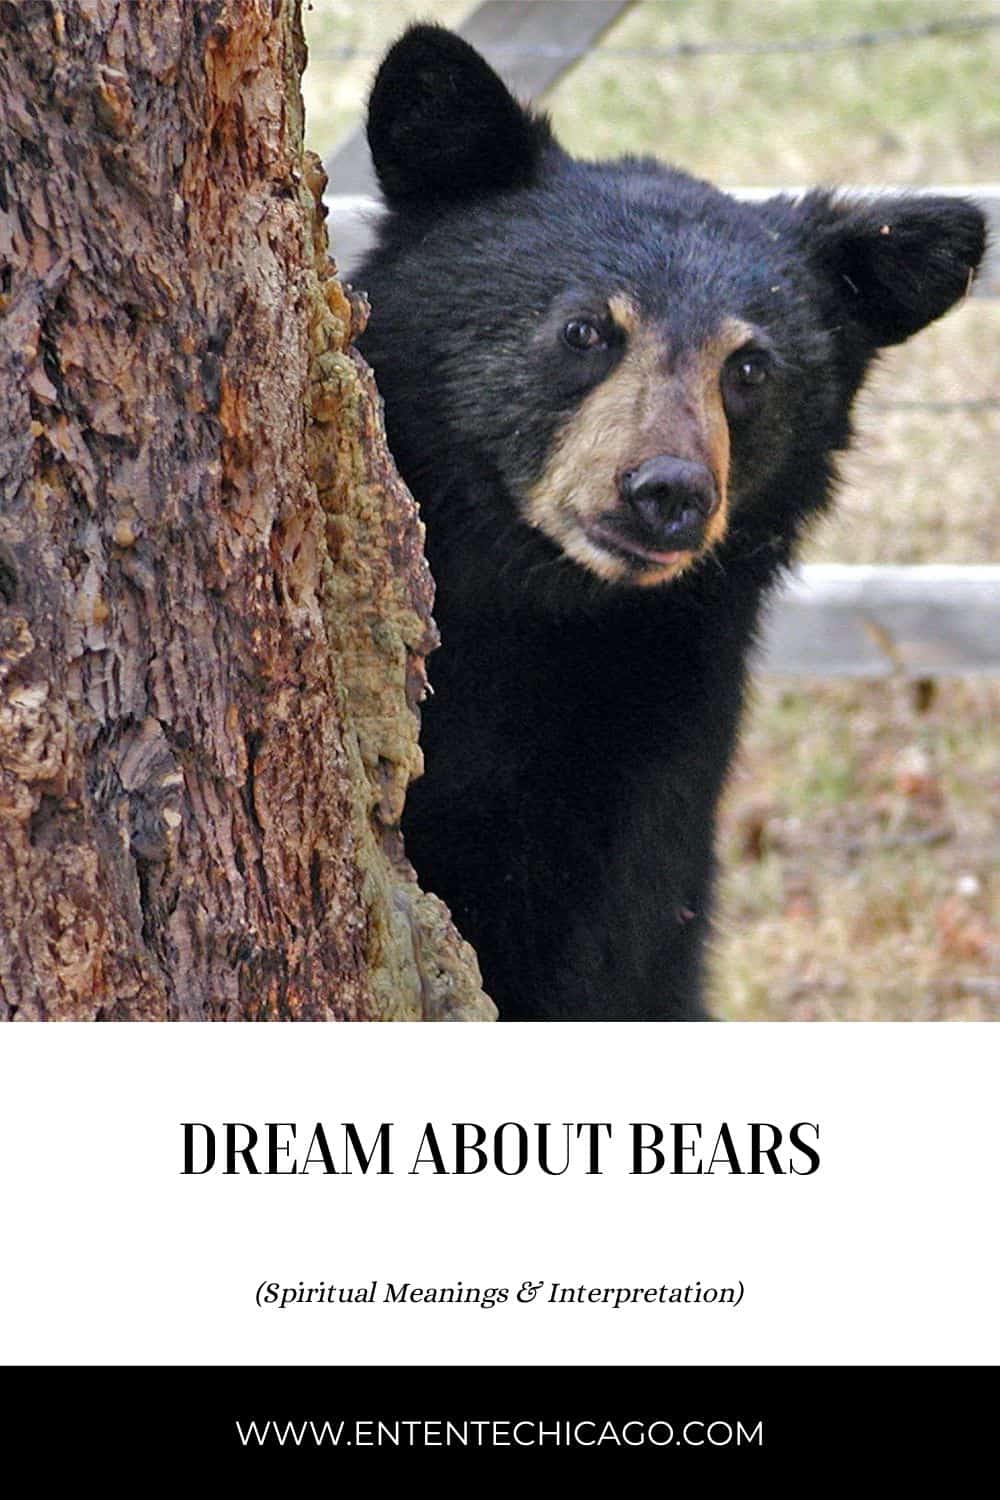 Spiritual meanings of bear dreams